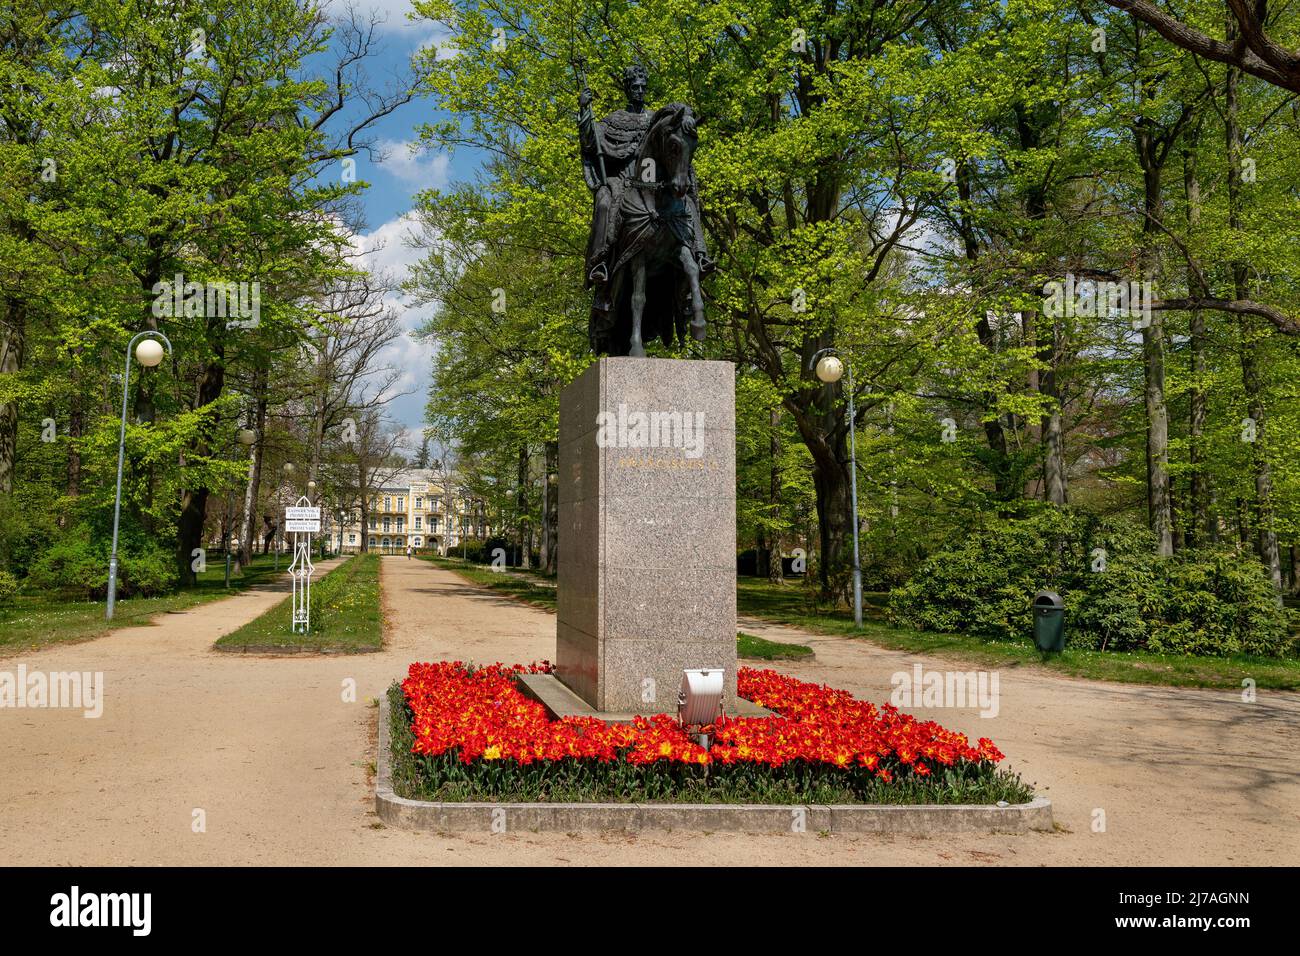 Statue in the central park of small west Bohemian spa town Frantiskovy Lazne (Franzensbad) - Czech Republic Stock Photo